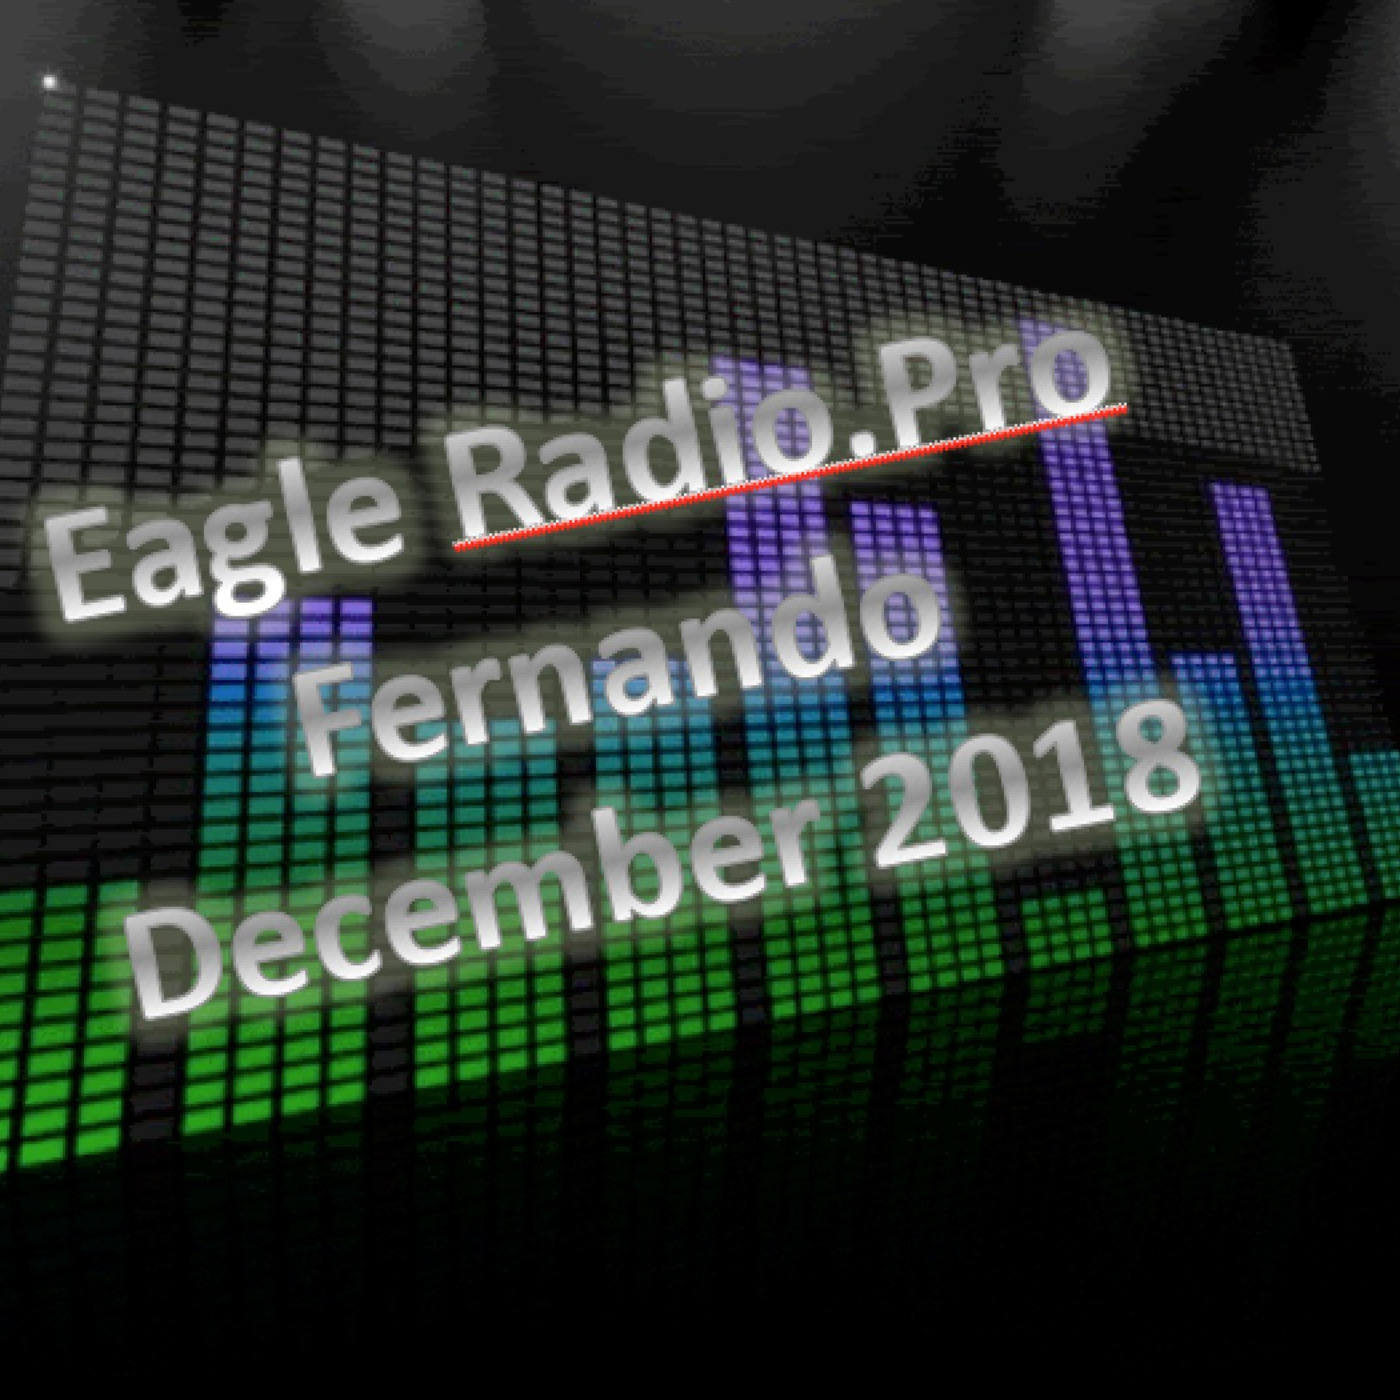 Fernando - Eagle Radio Pro Show - December 2018